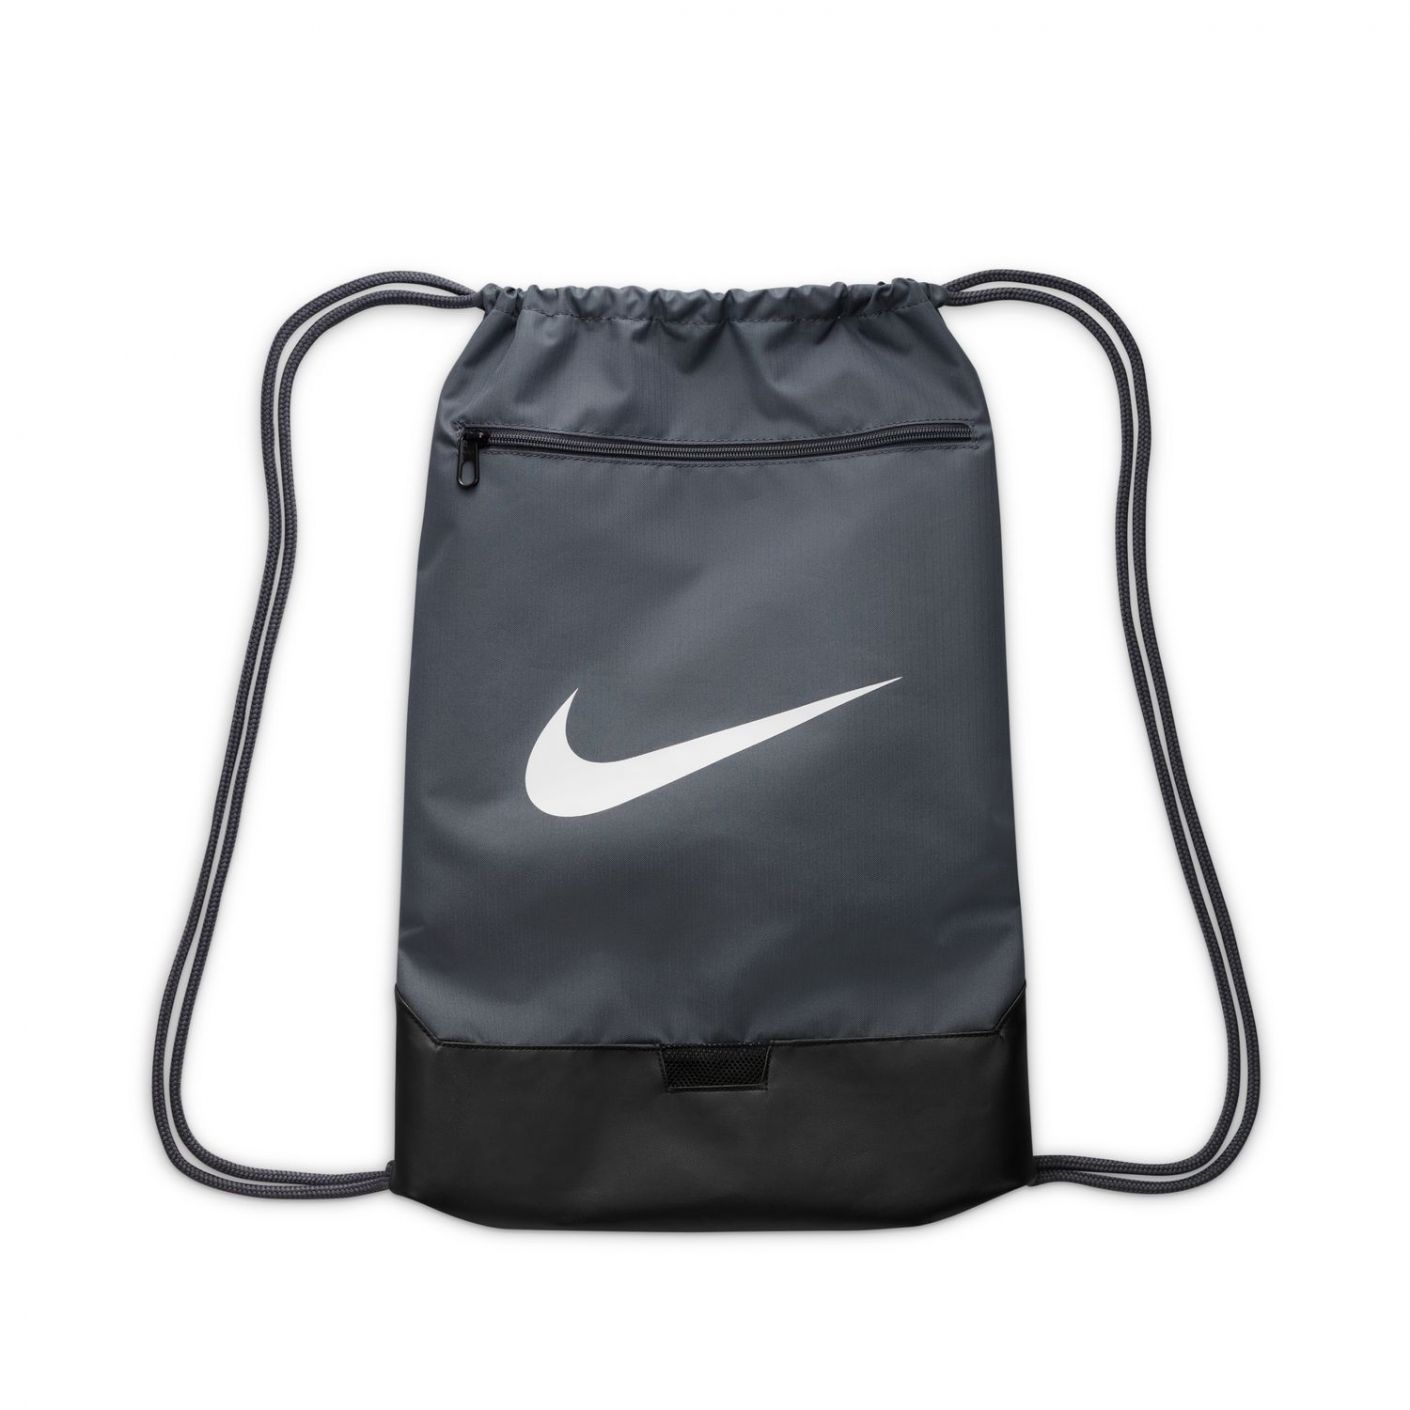 Nike Brasilia Bag 9.5 Flint Grey/Black/White